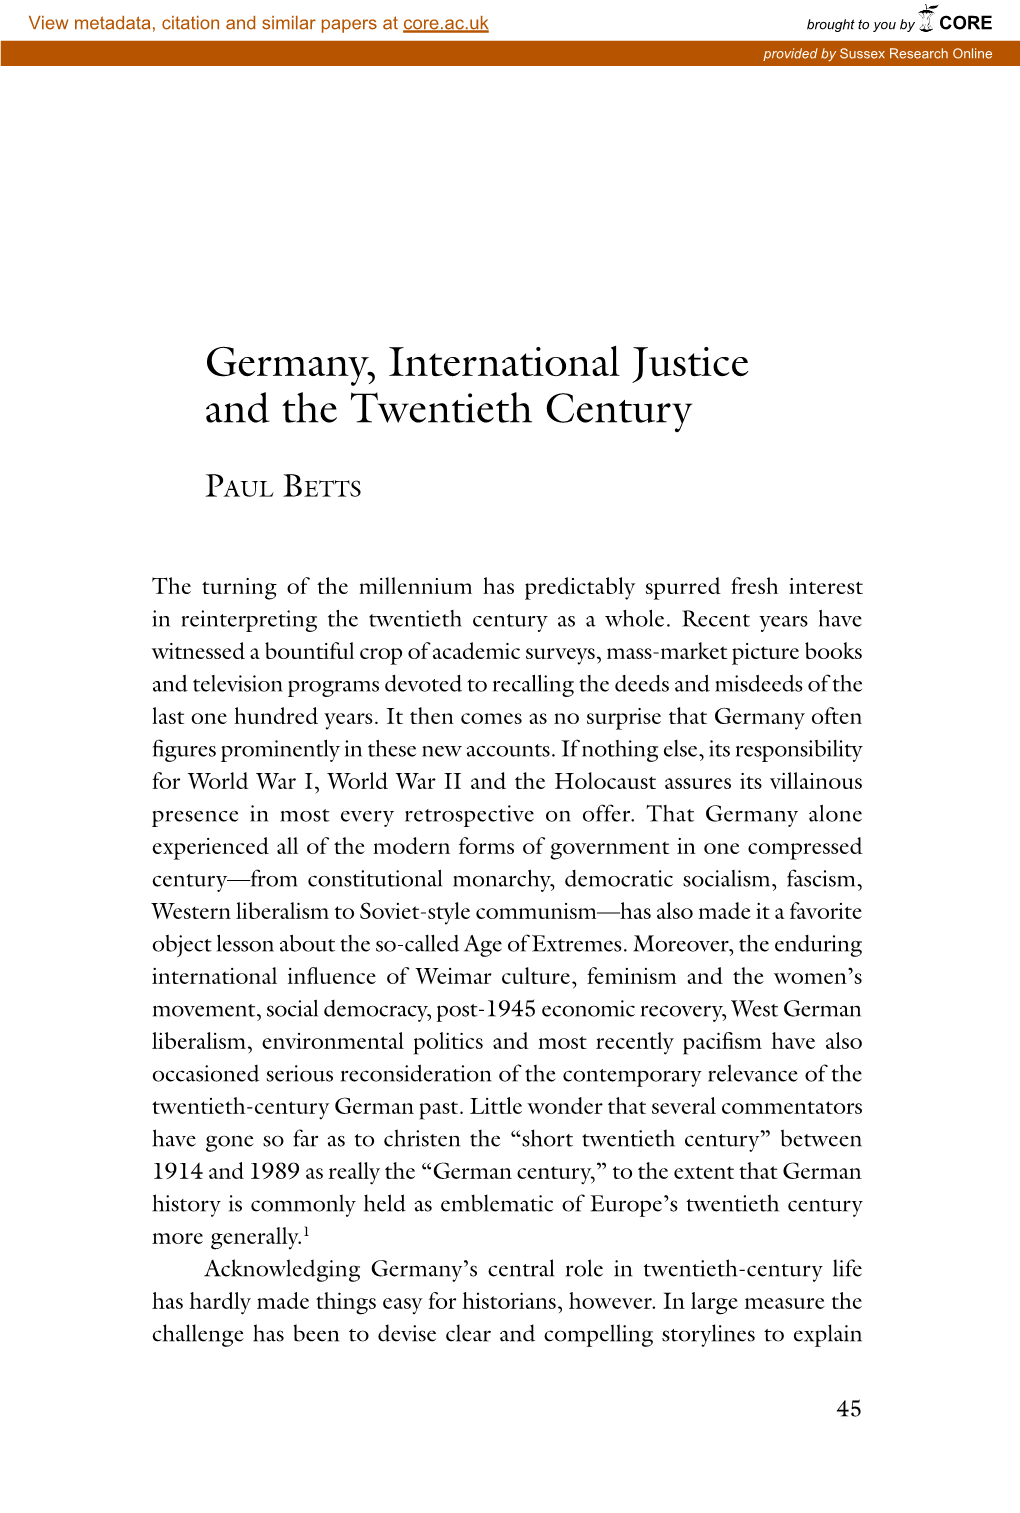 Germany, International Justice and the Twentieth Century